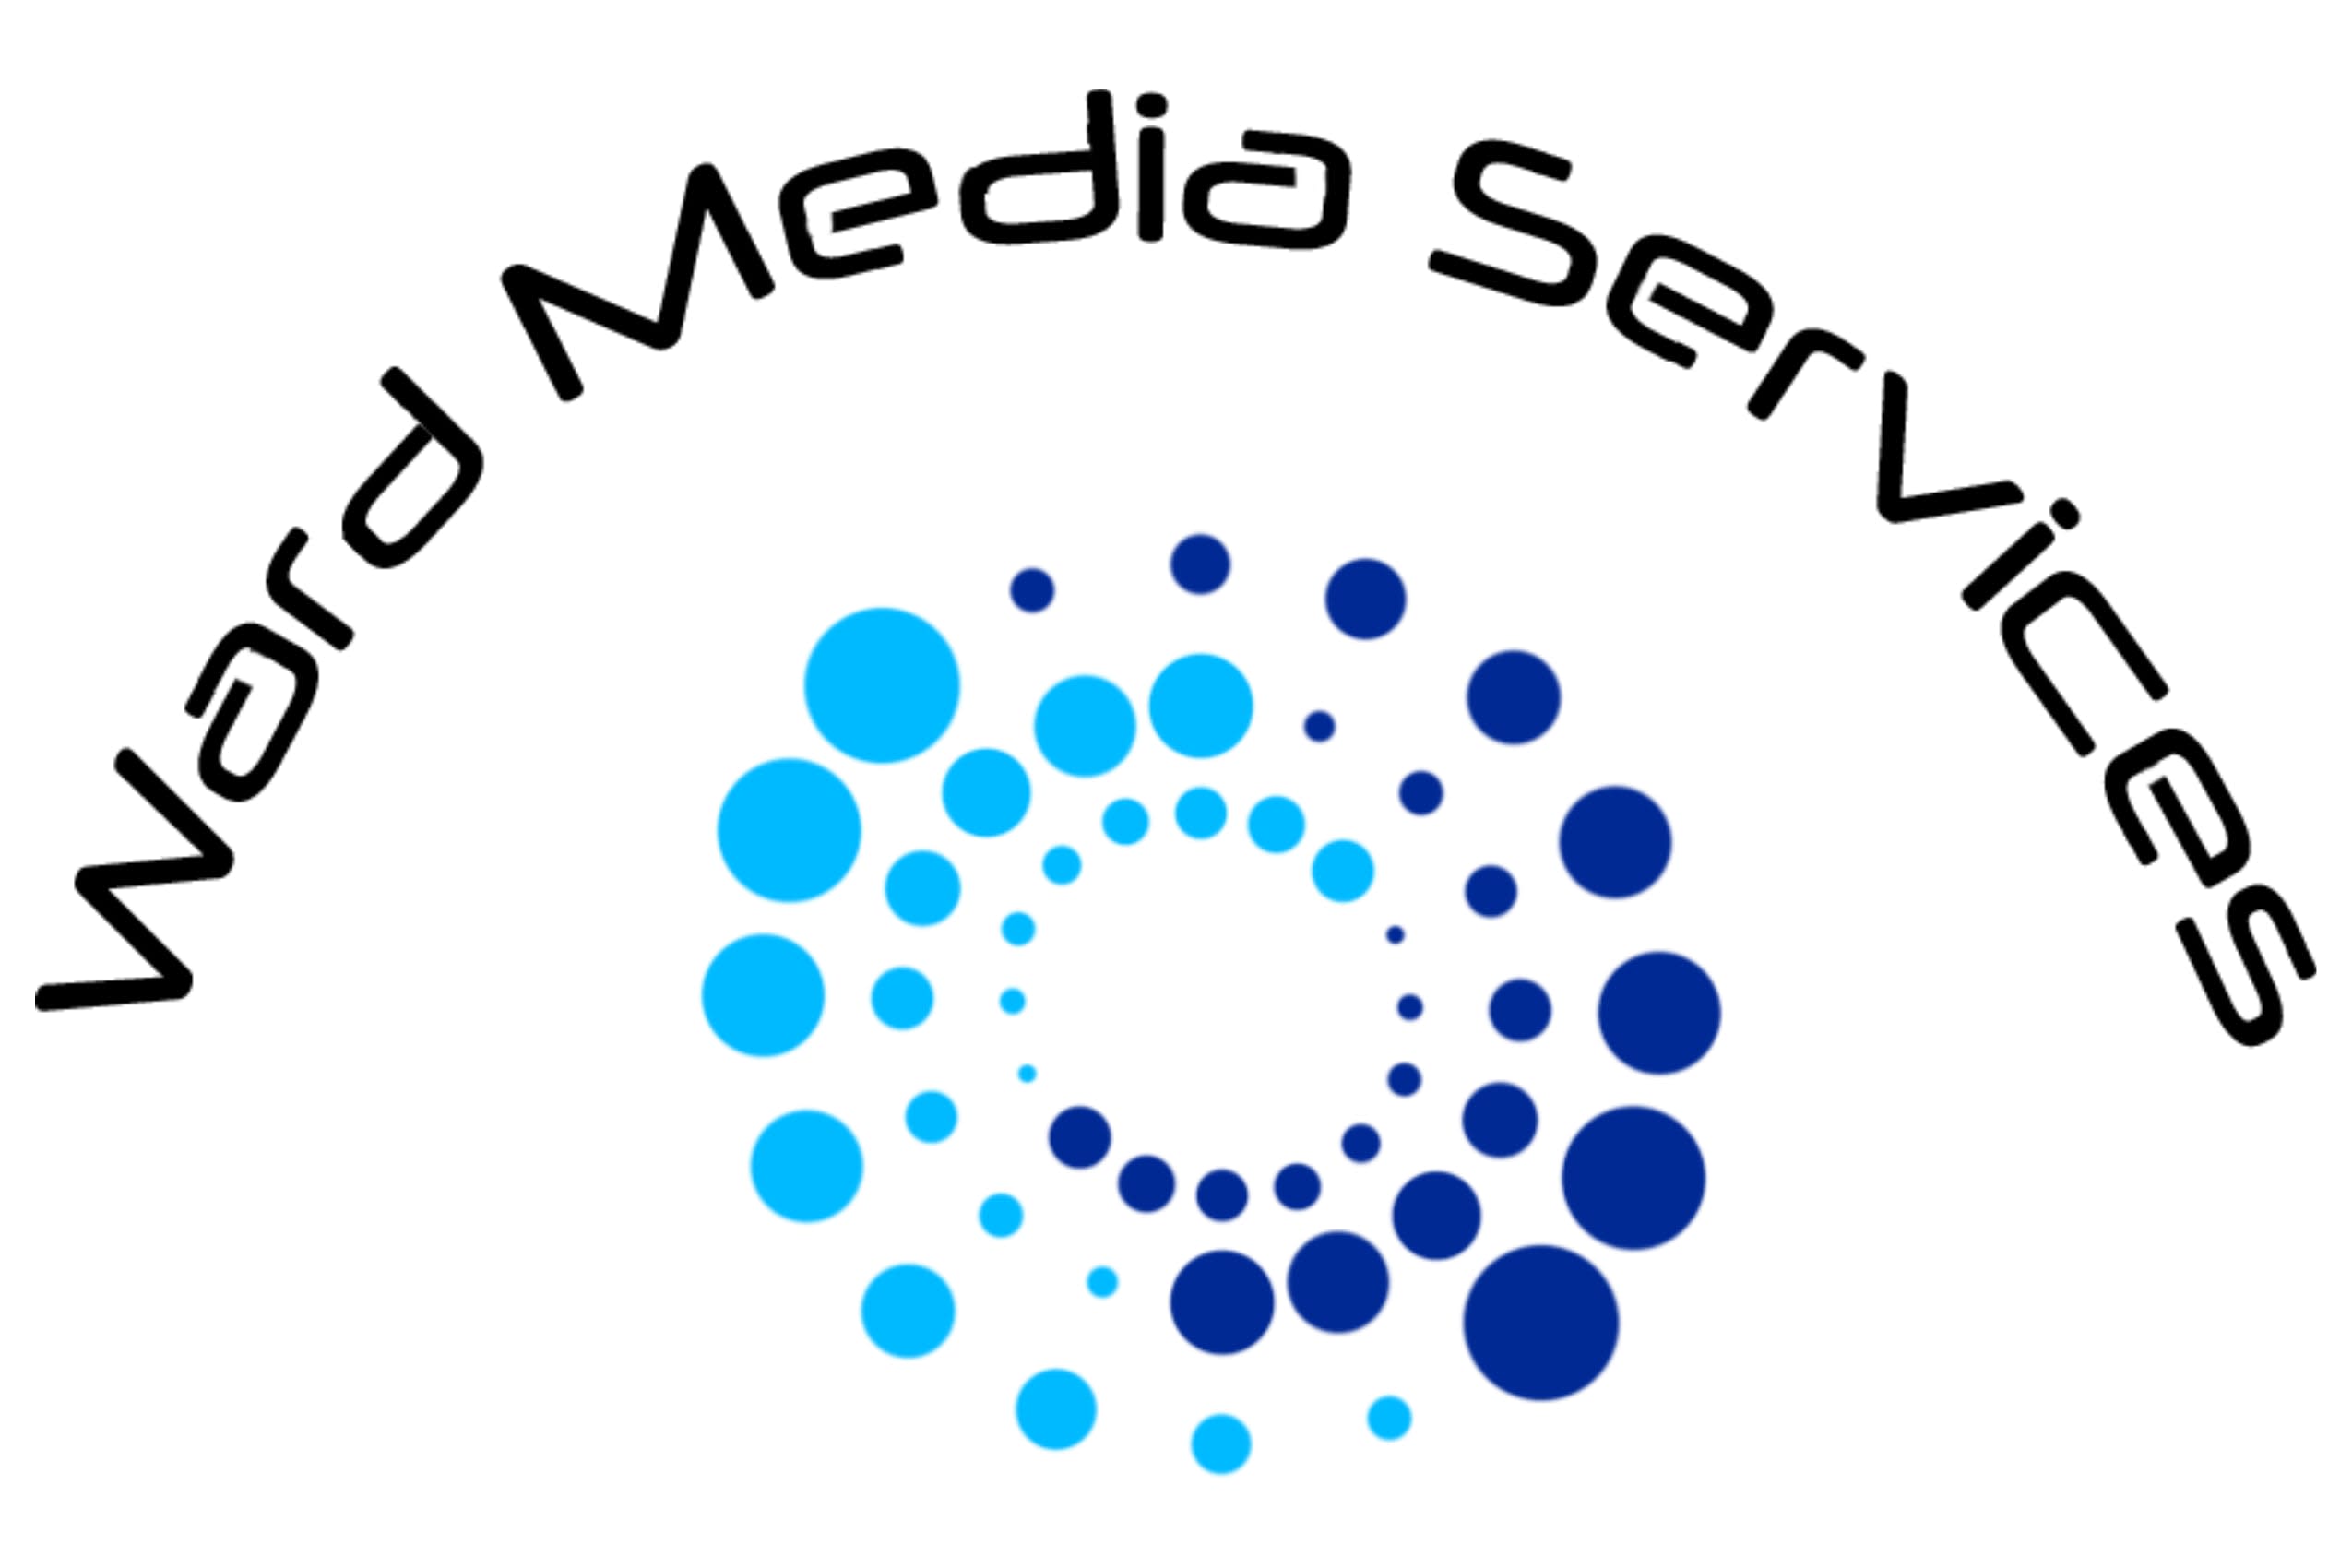 Ward Media Services LLC